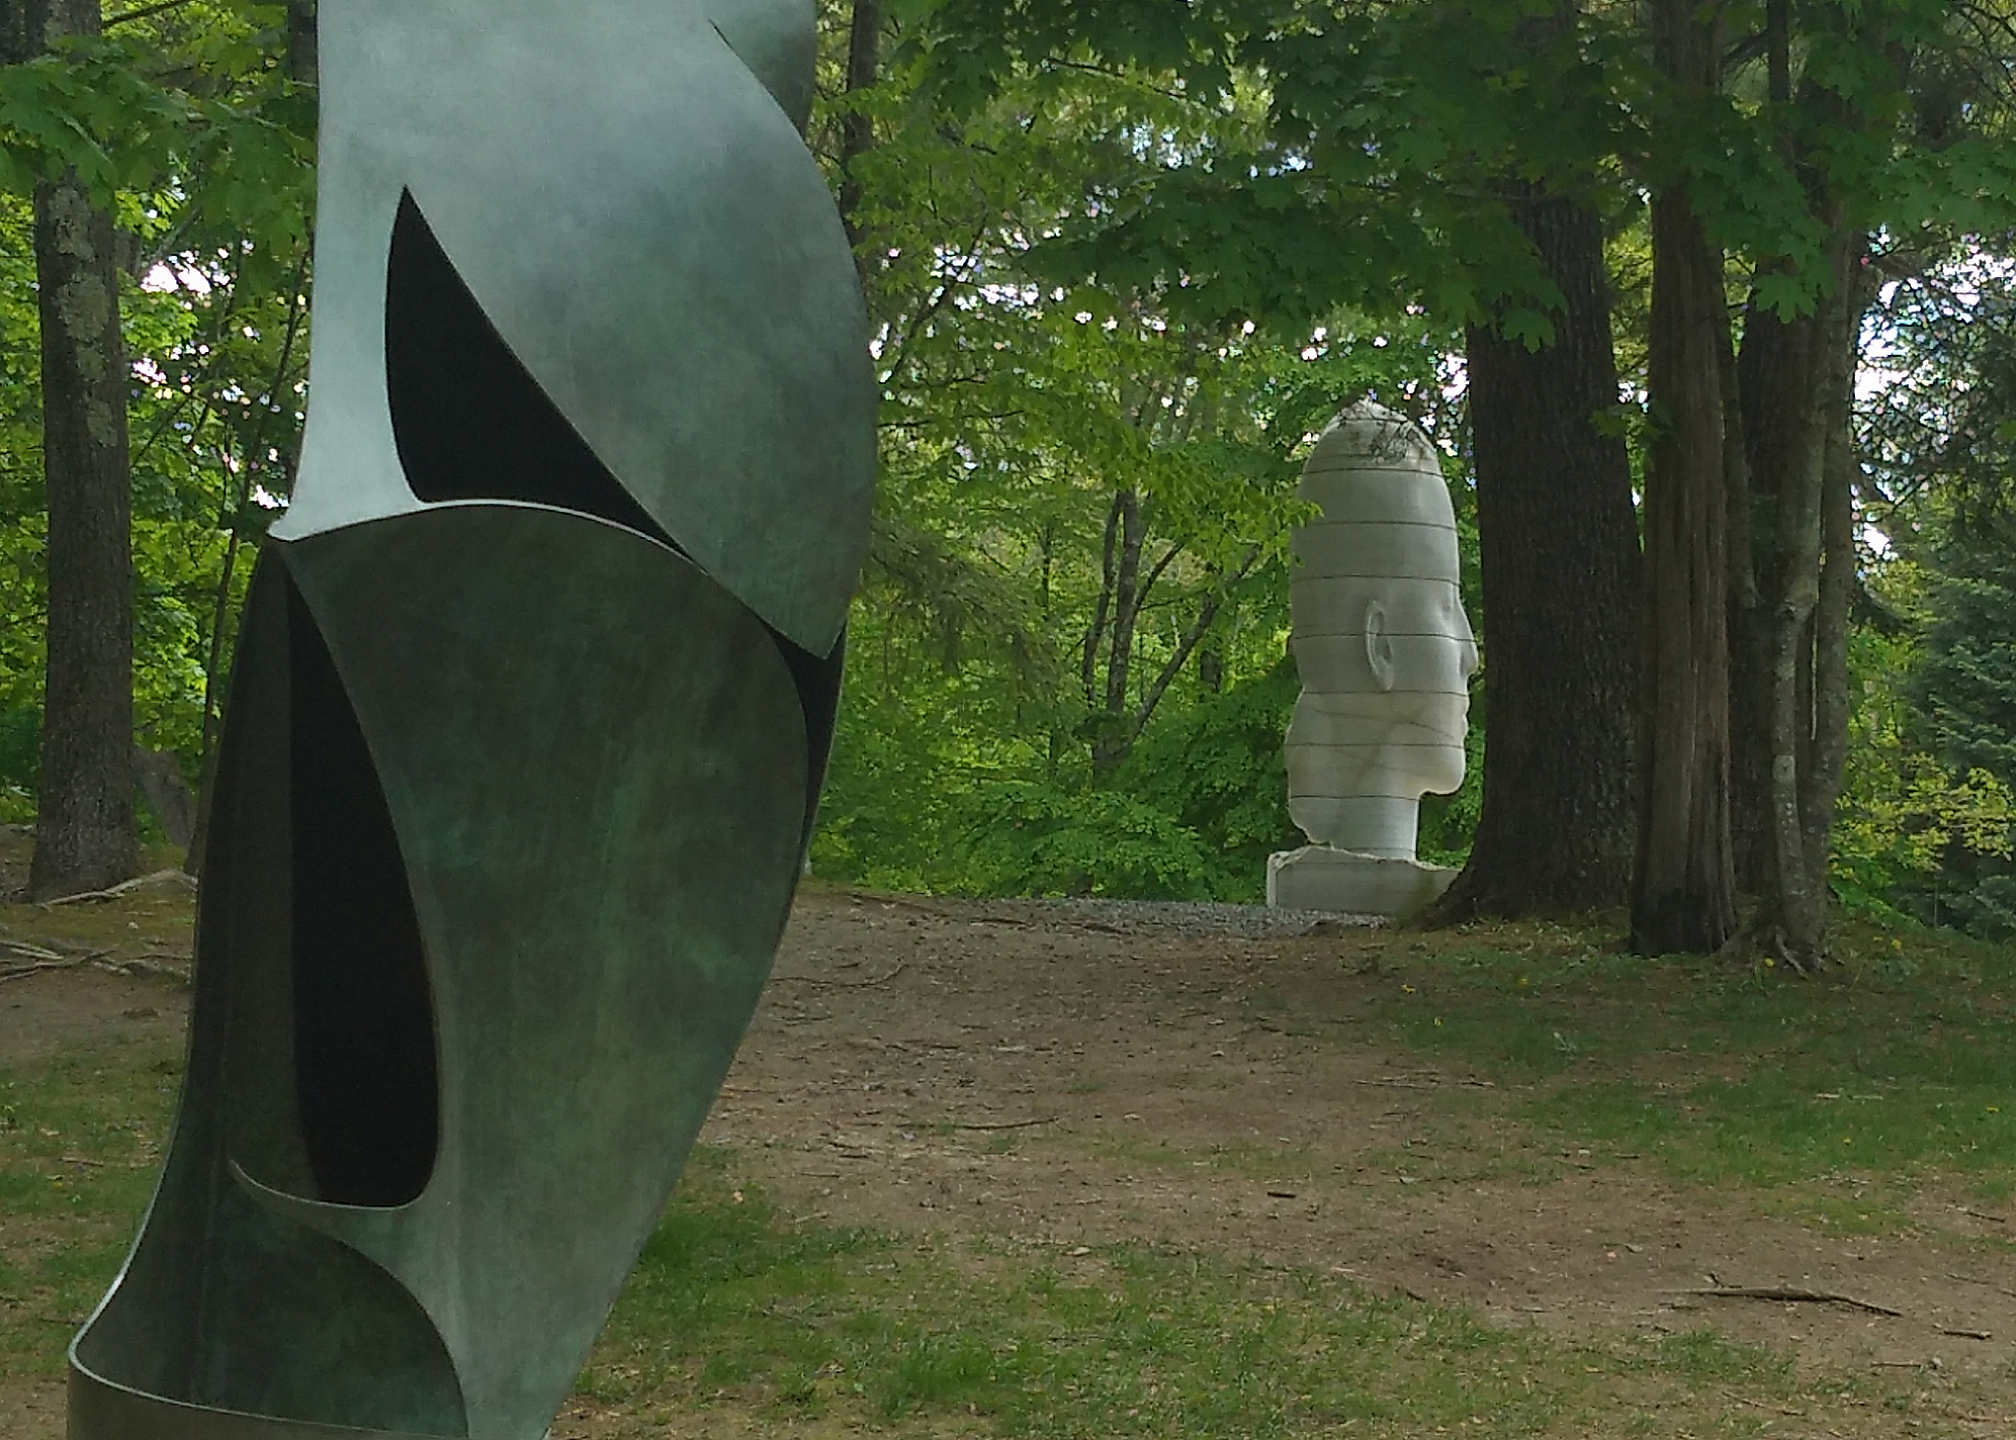 deCordova Sculpture Park, May 2021